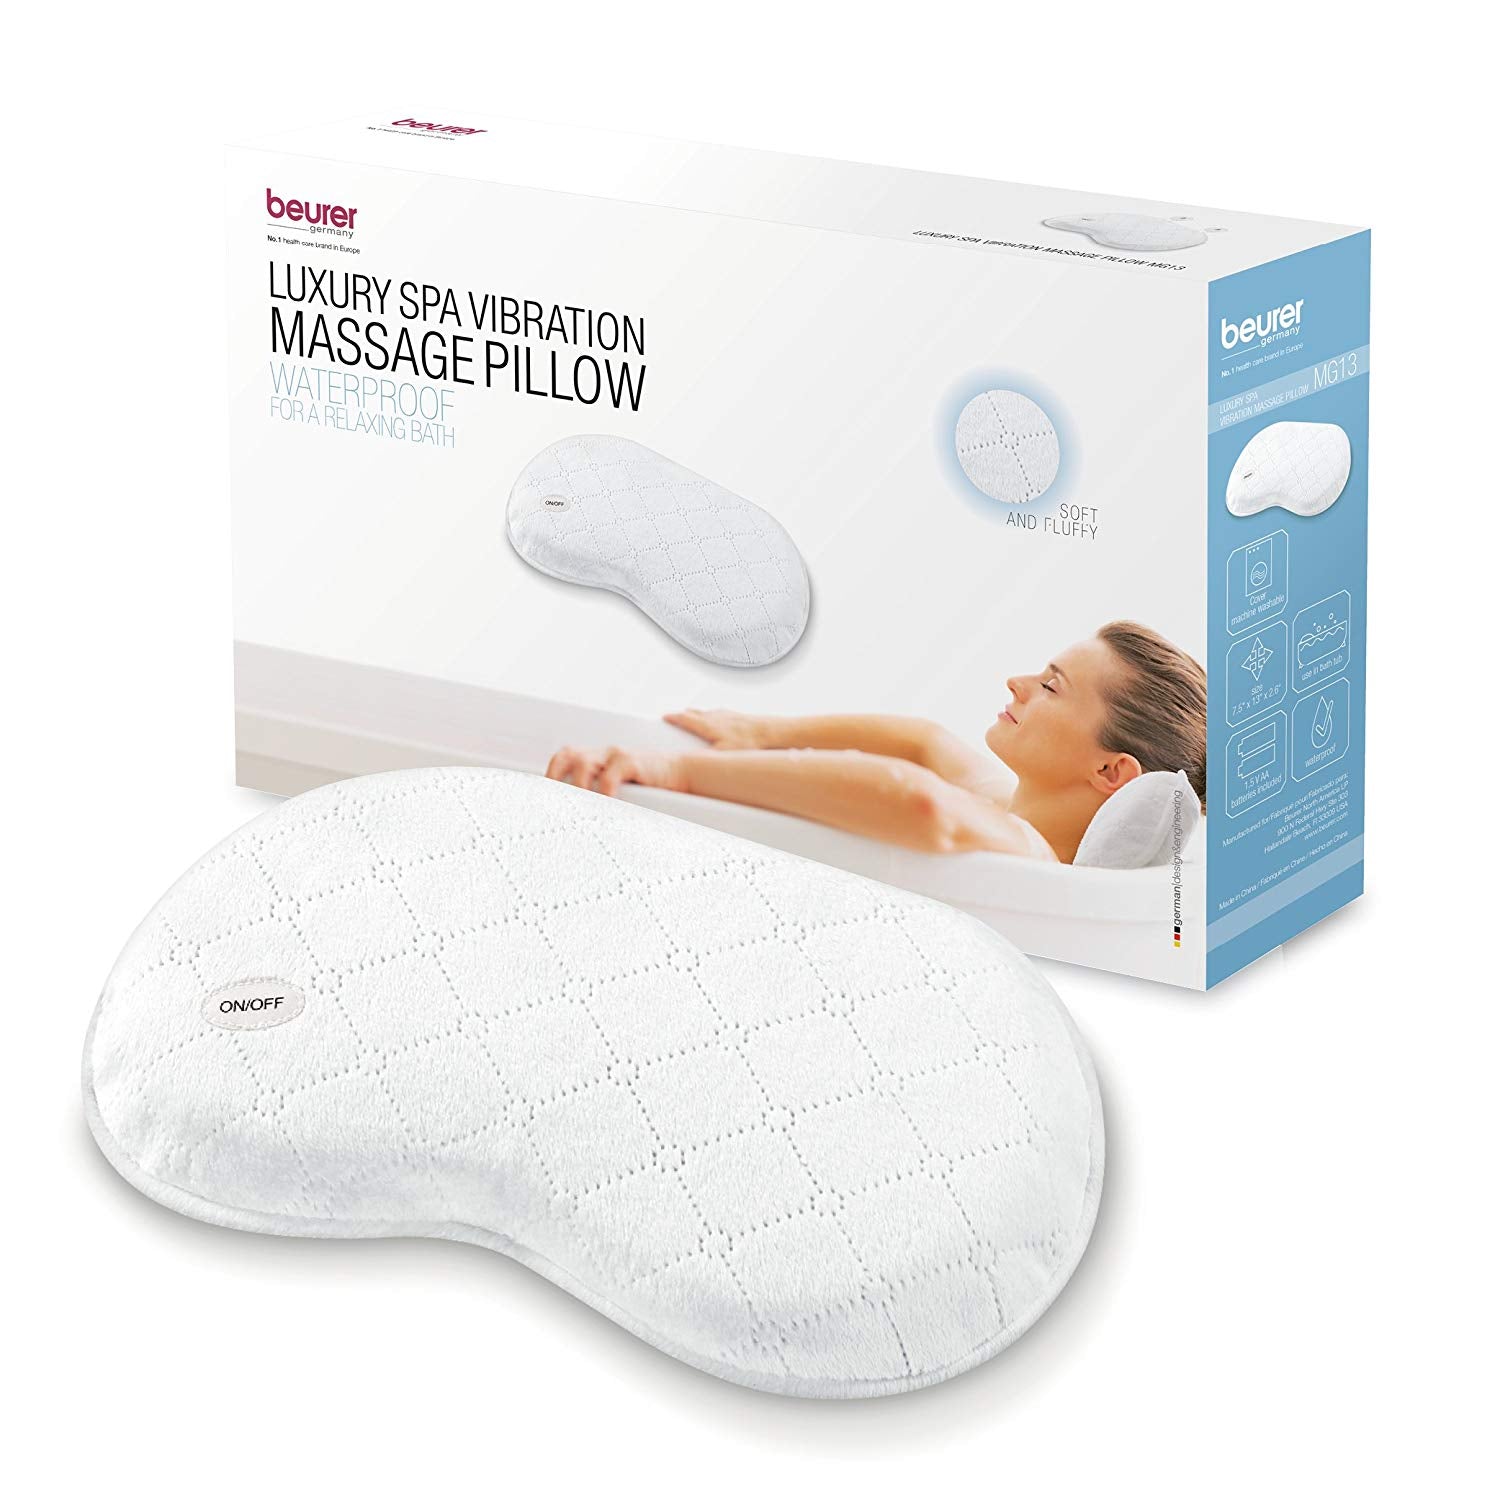 Beurer Soft Waterproof Vibrating Spa Pillow, MG13